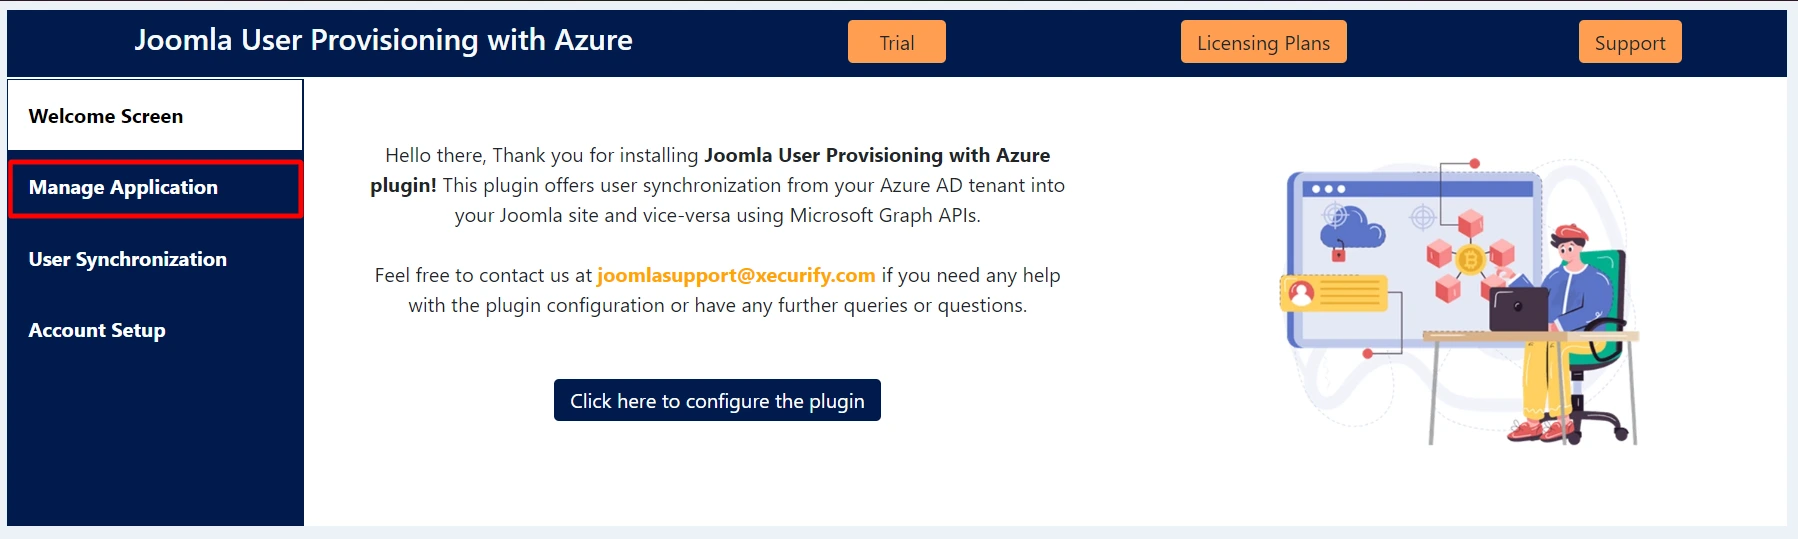 Azure AD user sync with Joomla - Manageapp